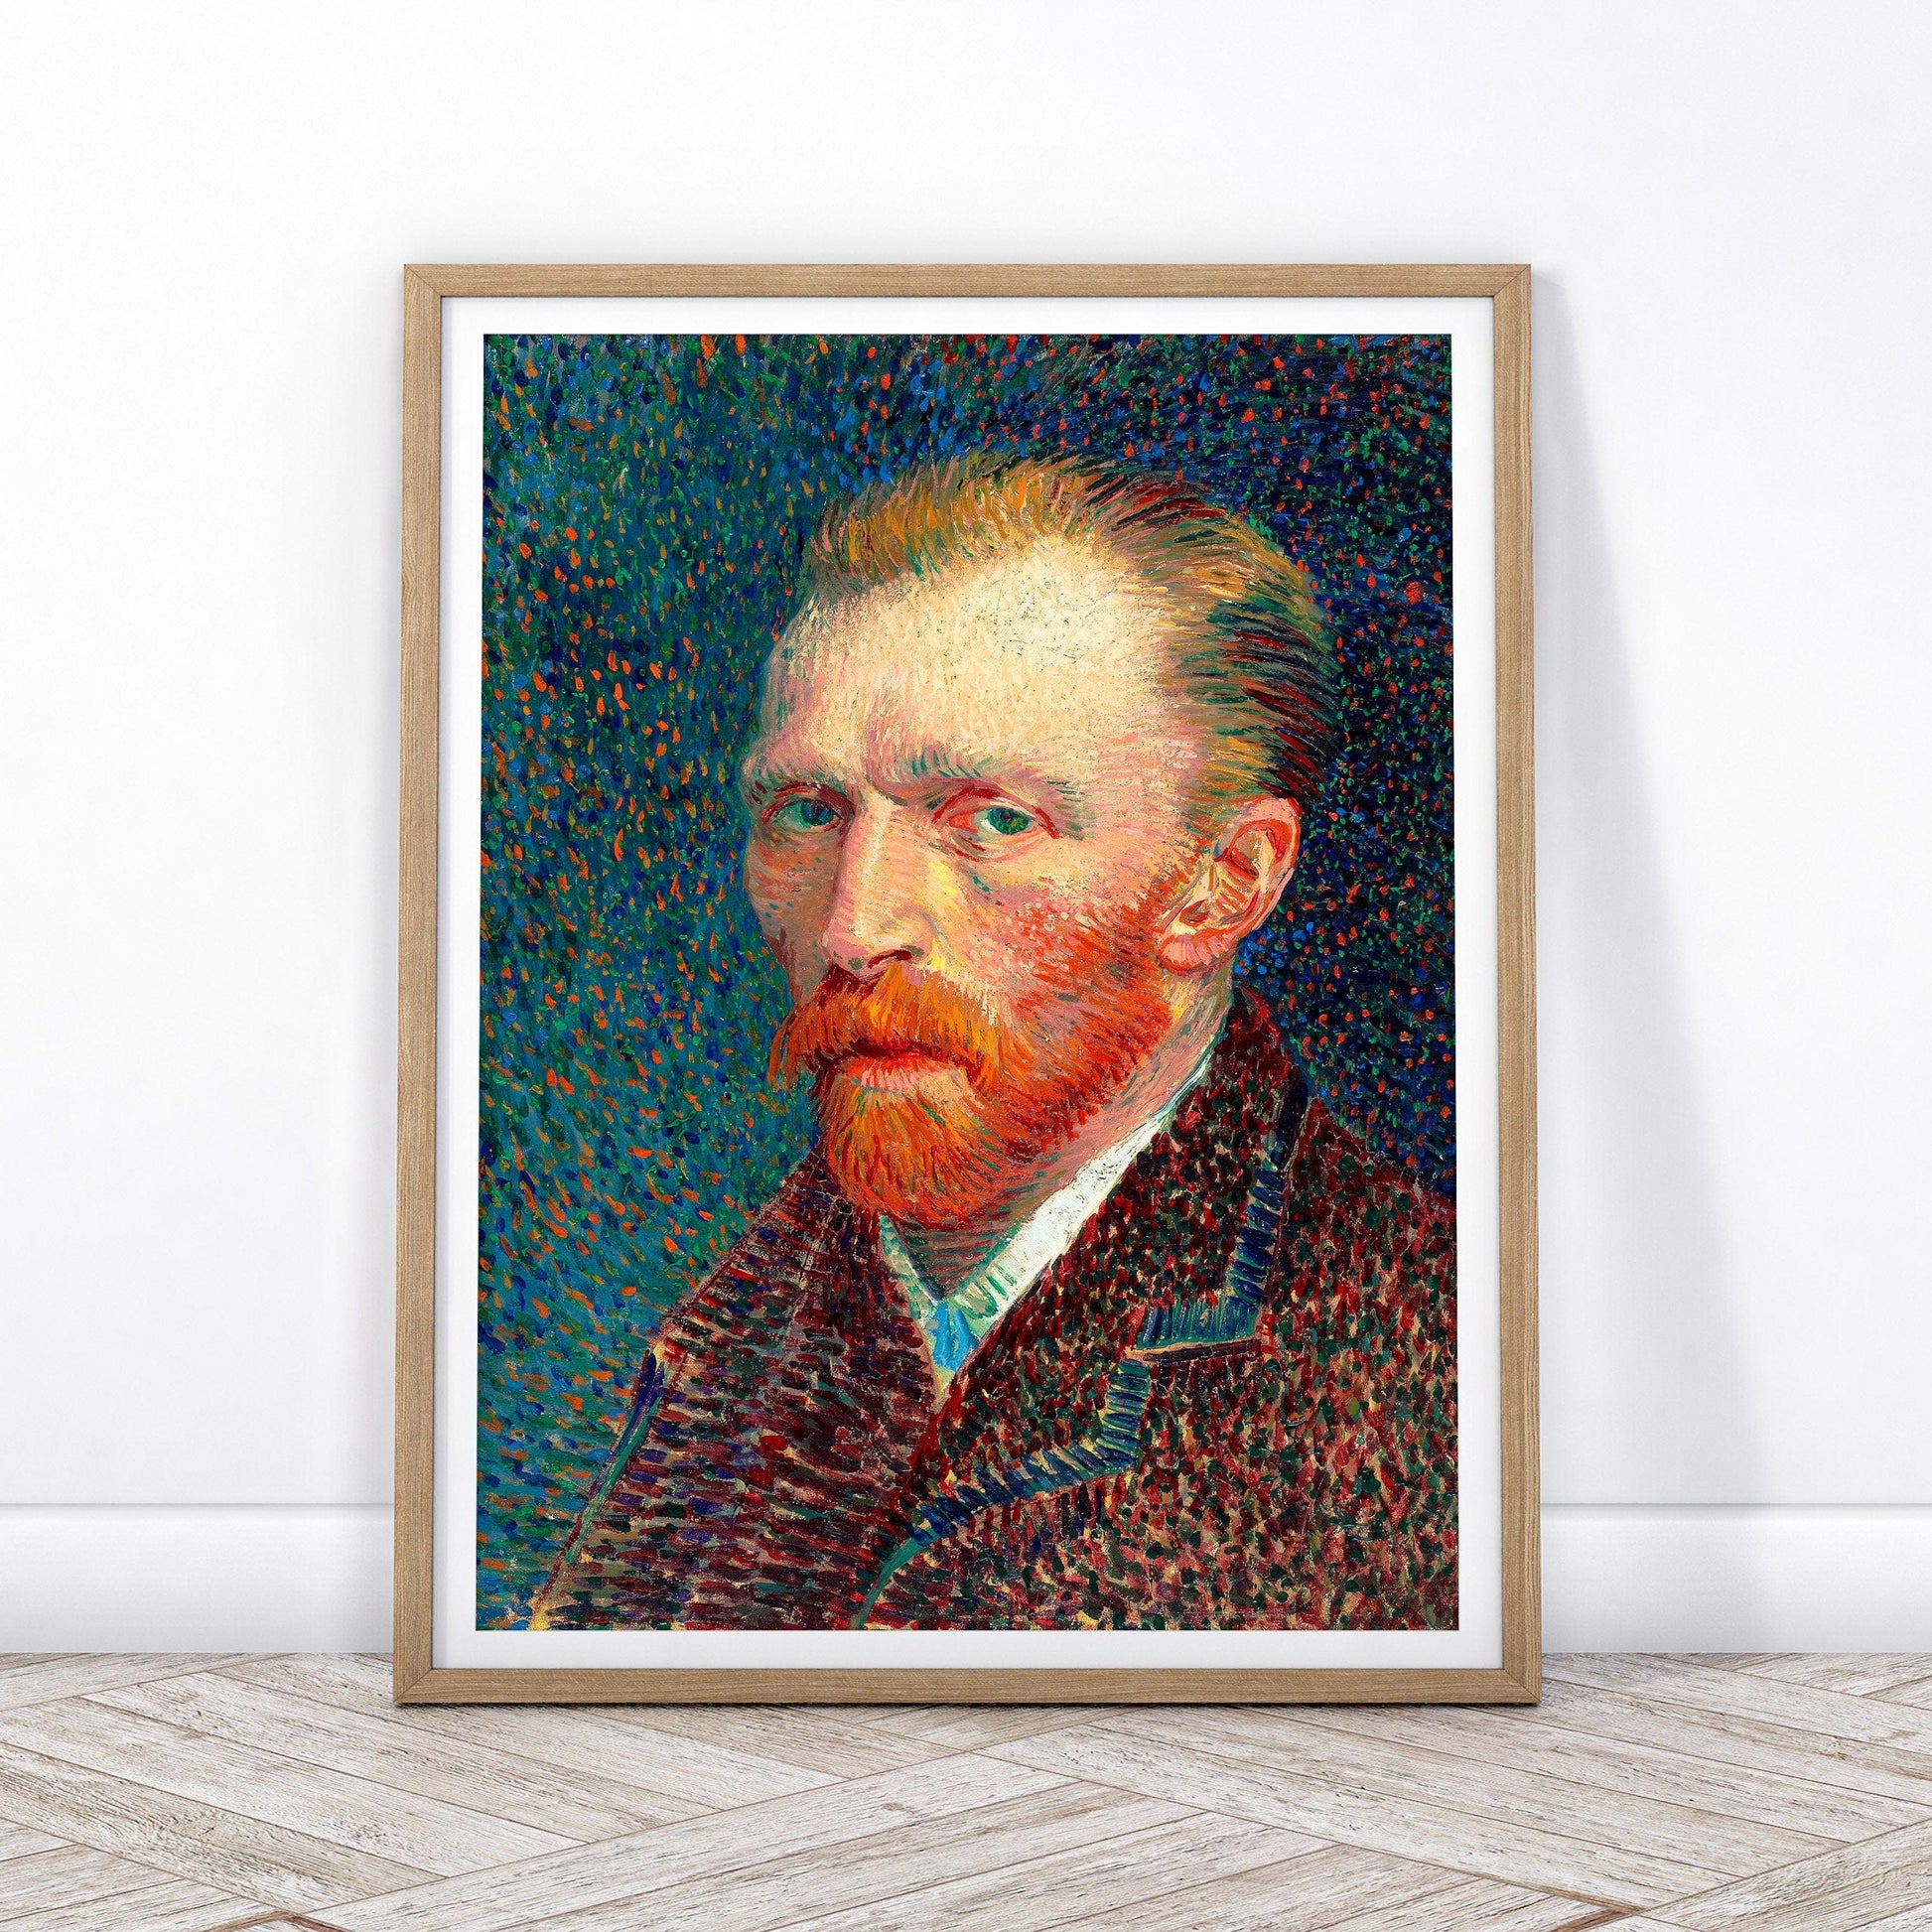 Home Poster Decor Van Gogh Poster, Van Gogh Portrait, Self-Portrait, Van Gogh Painting, Van Gogh Exhibition, Museum Quality Print, Various sizes